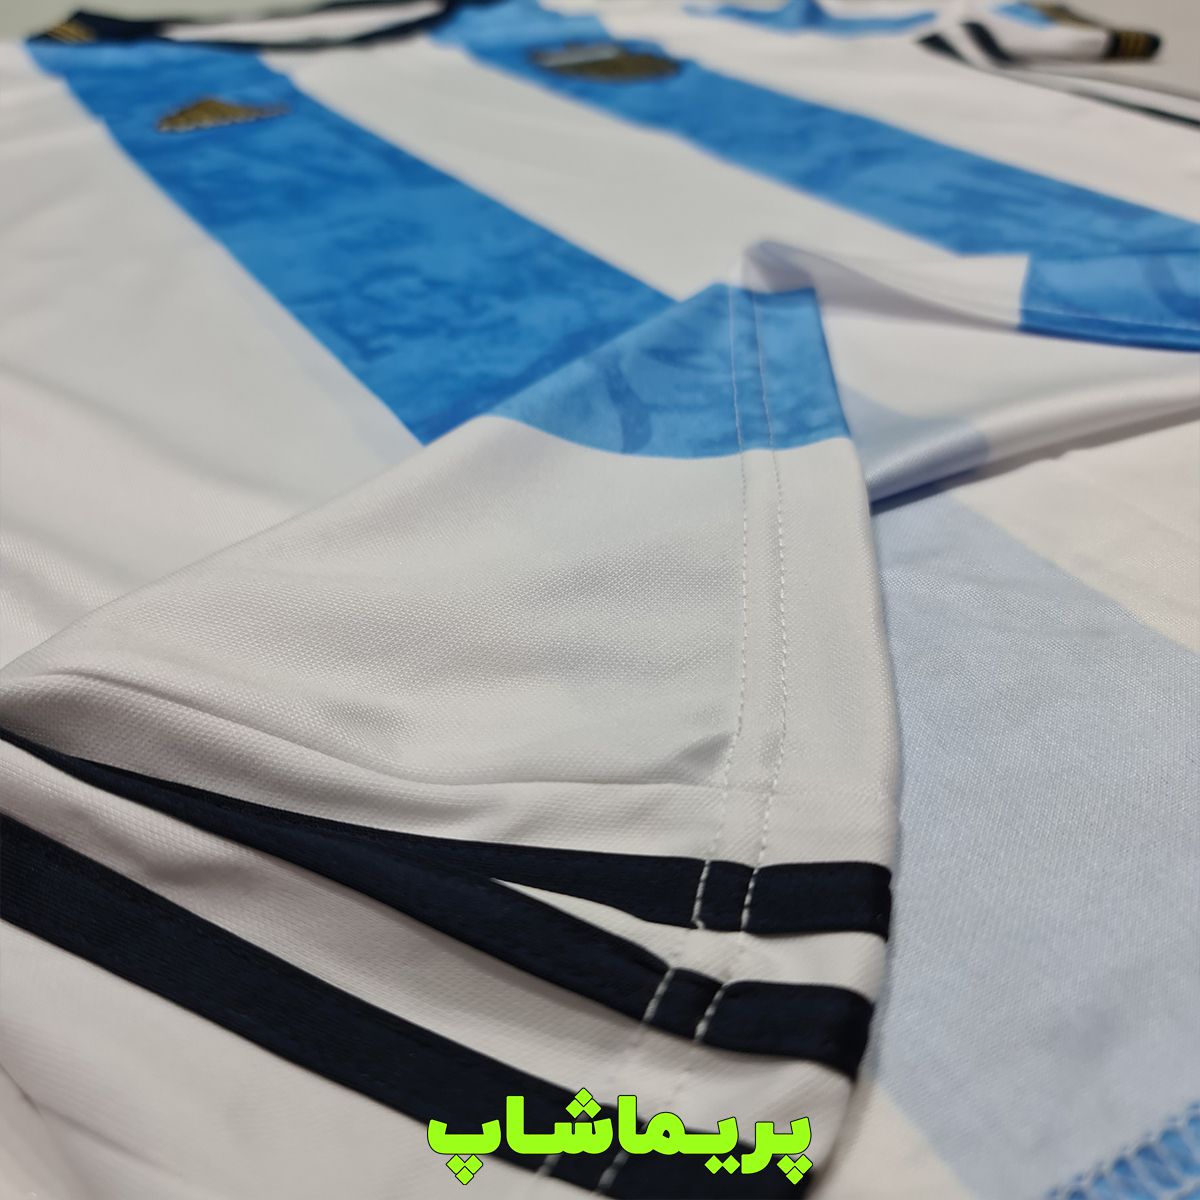 لباس آرژانتین 2022 کانسپت